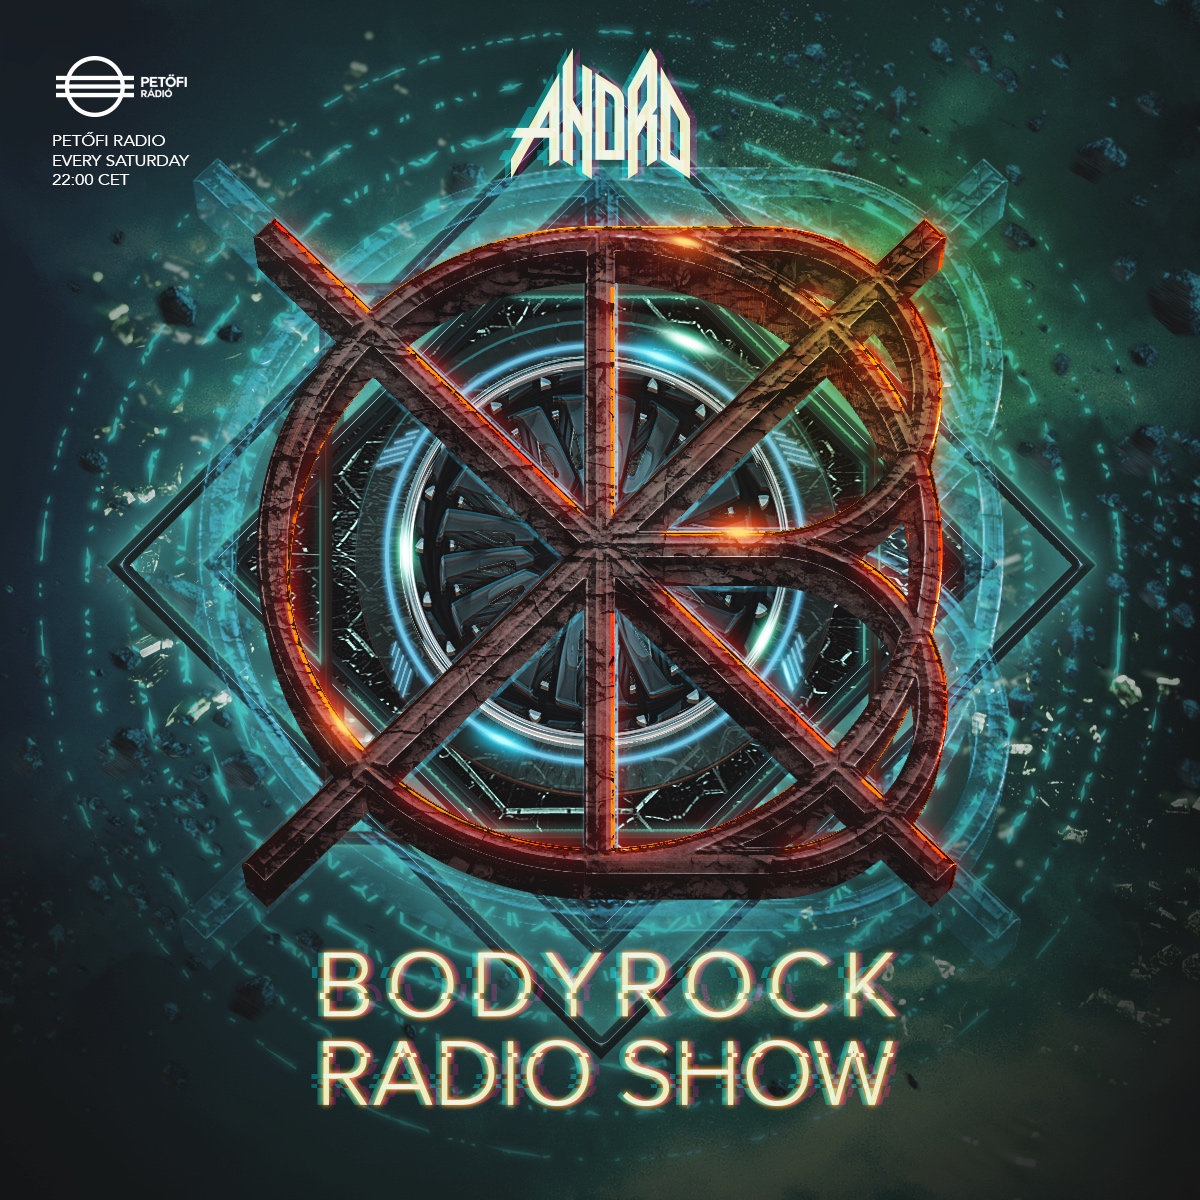 Bodyrock Radio Show 2 (2015)